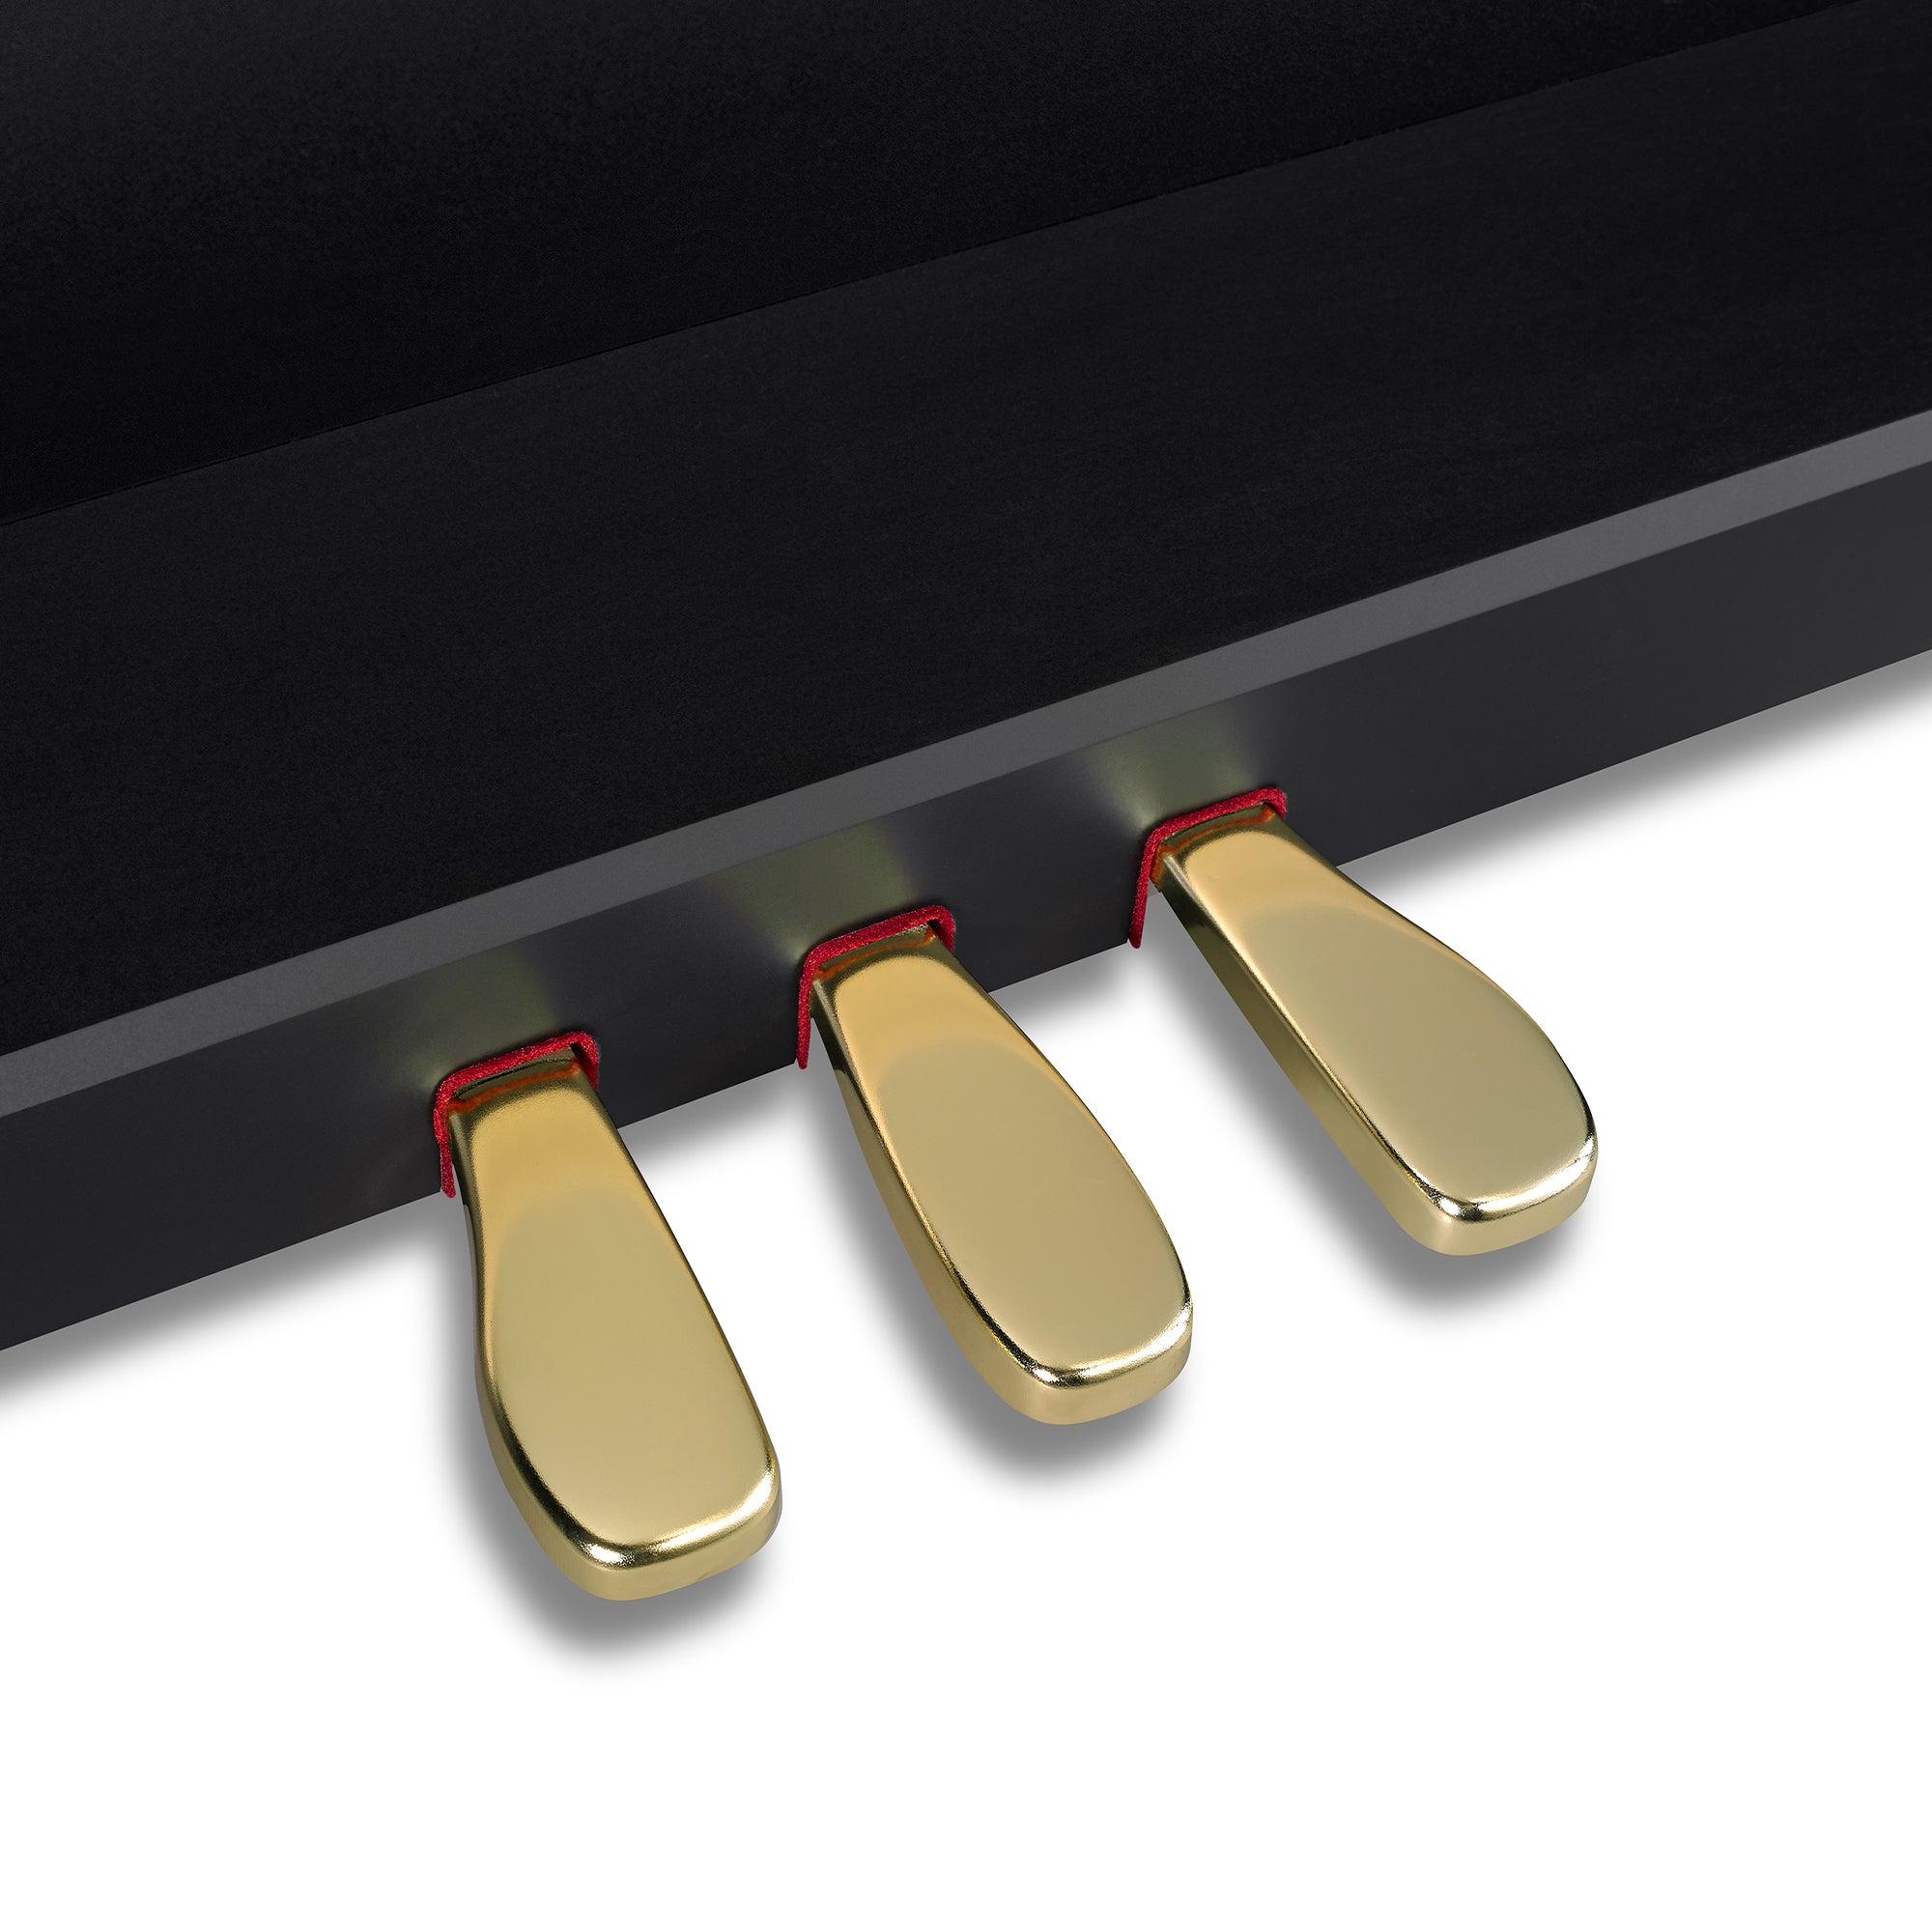 Casio Celviano Grand Hybrid GP-310 Digital Piano - Satin Black - Pedals